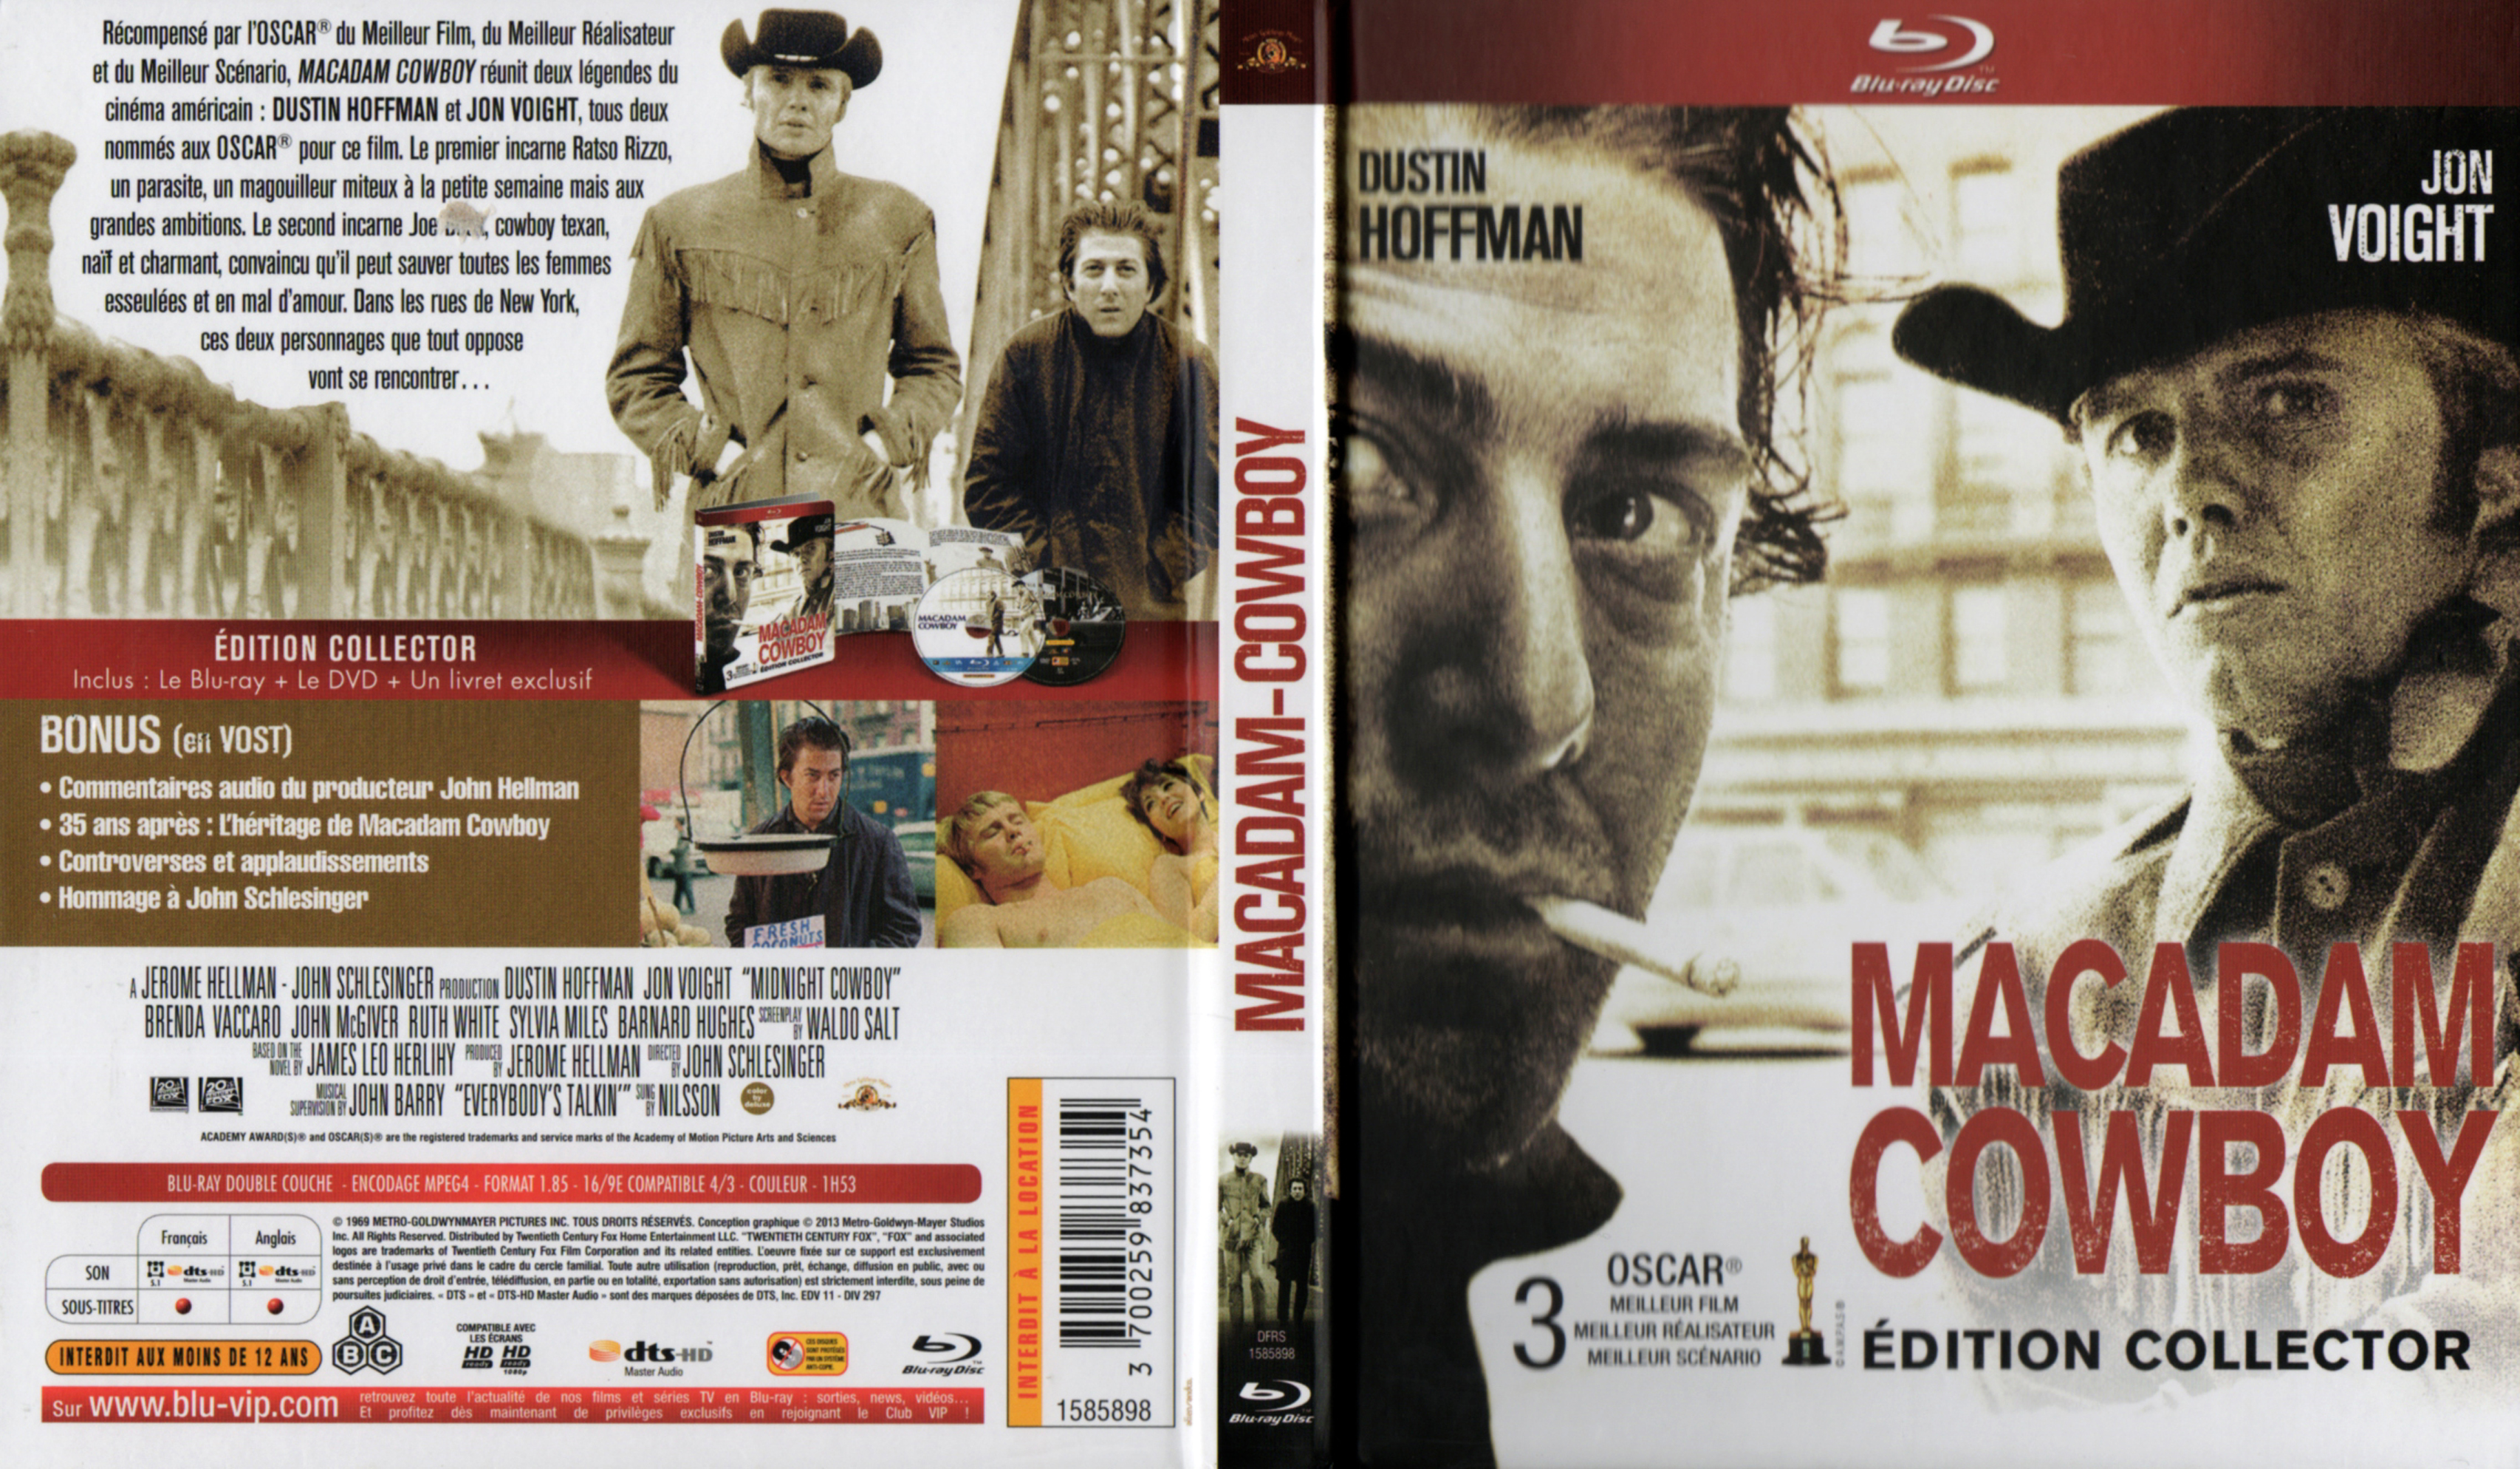 Jaquette DVD Macadam cowboy (BLU-RAY) v2